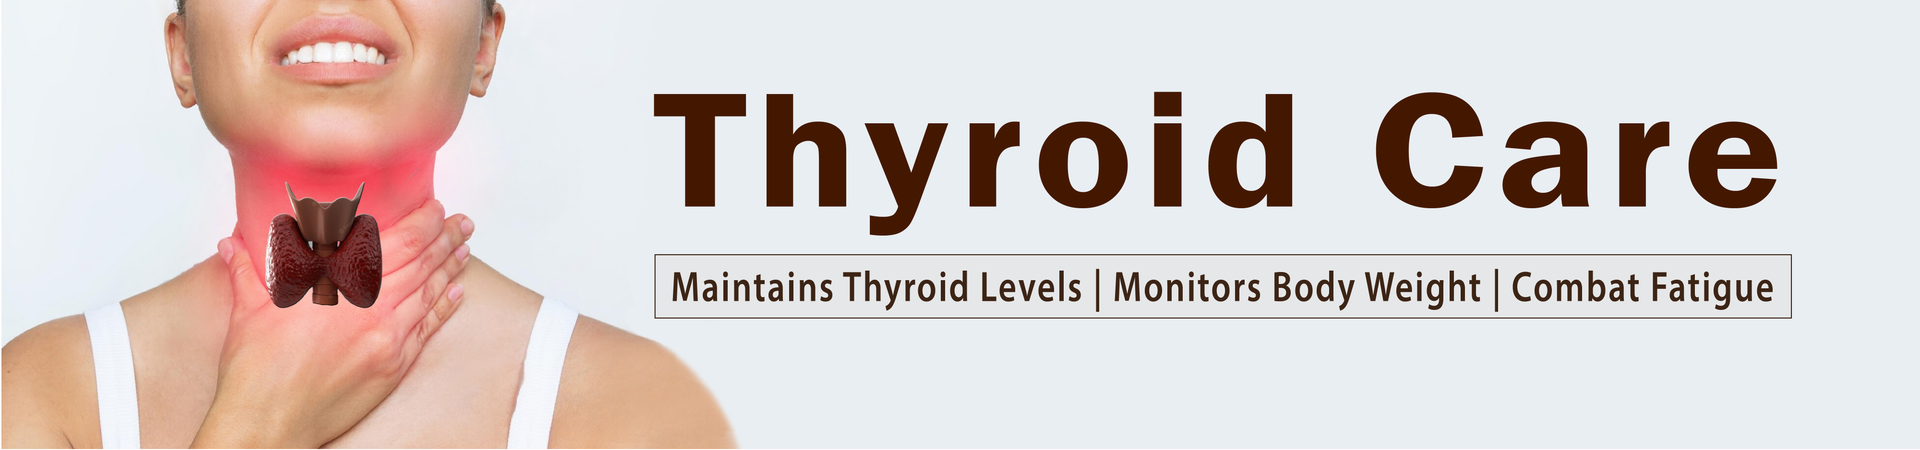 Ayurvedic Medicine for hypothyroidism - Thyroid Care